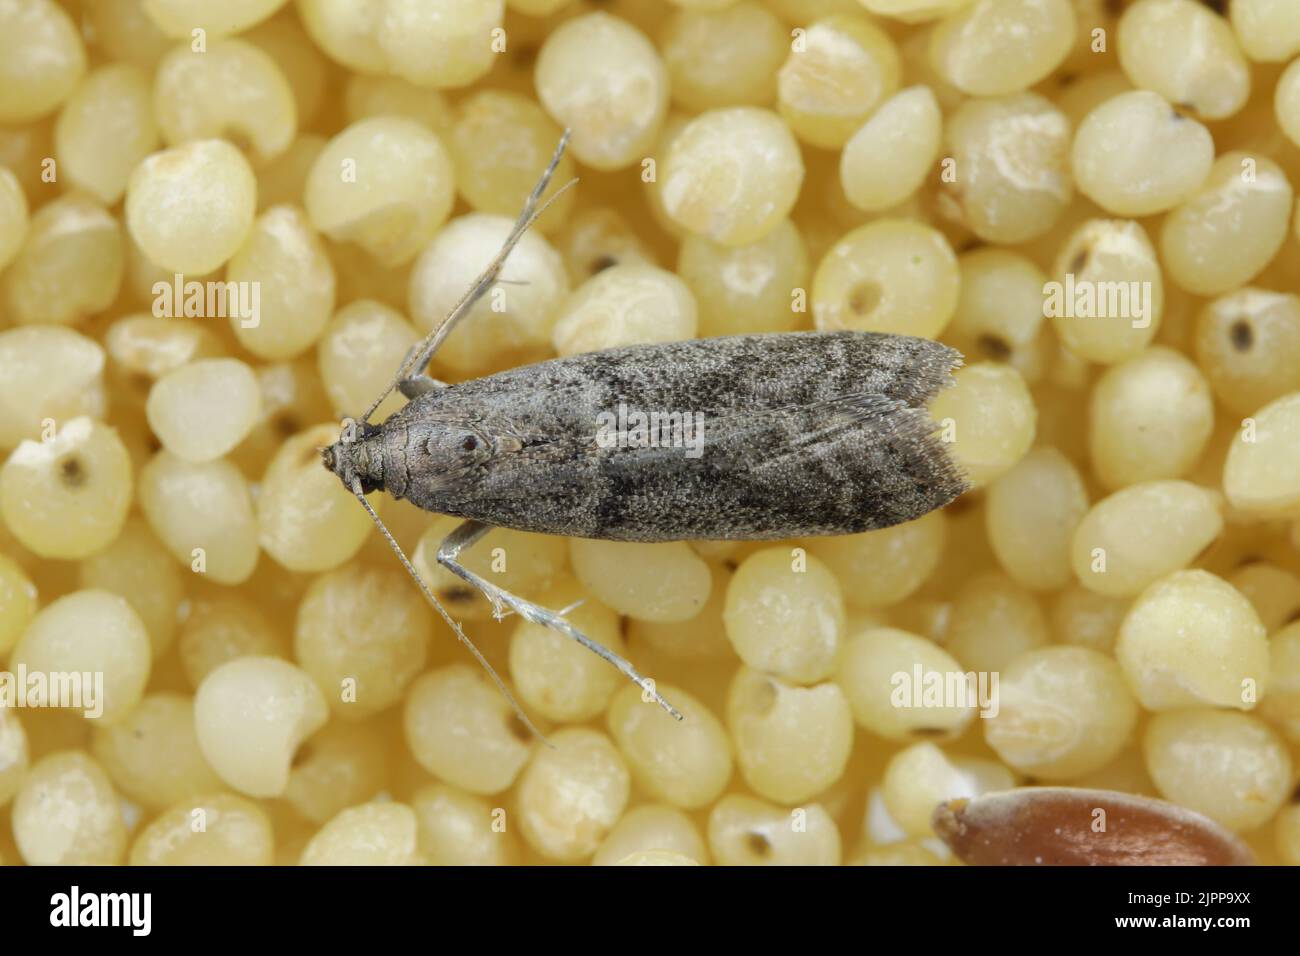 Detailed closeup on the small Tobacco Moth, Ephestia elutella - a common food pest. Color form with gray wings. Moth on bulgur porridge. Stock Photo